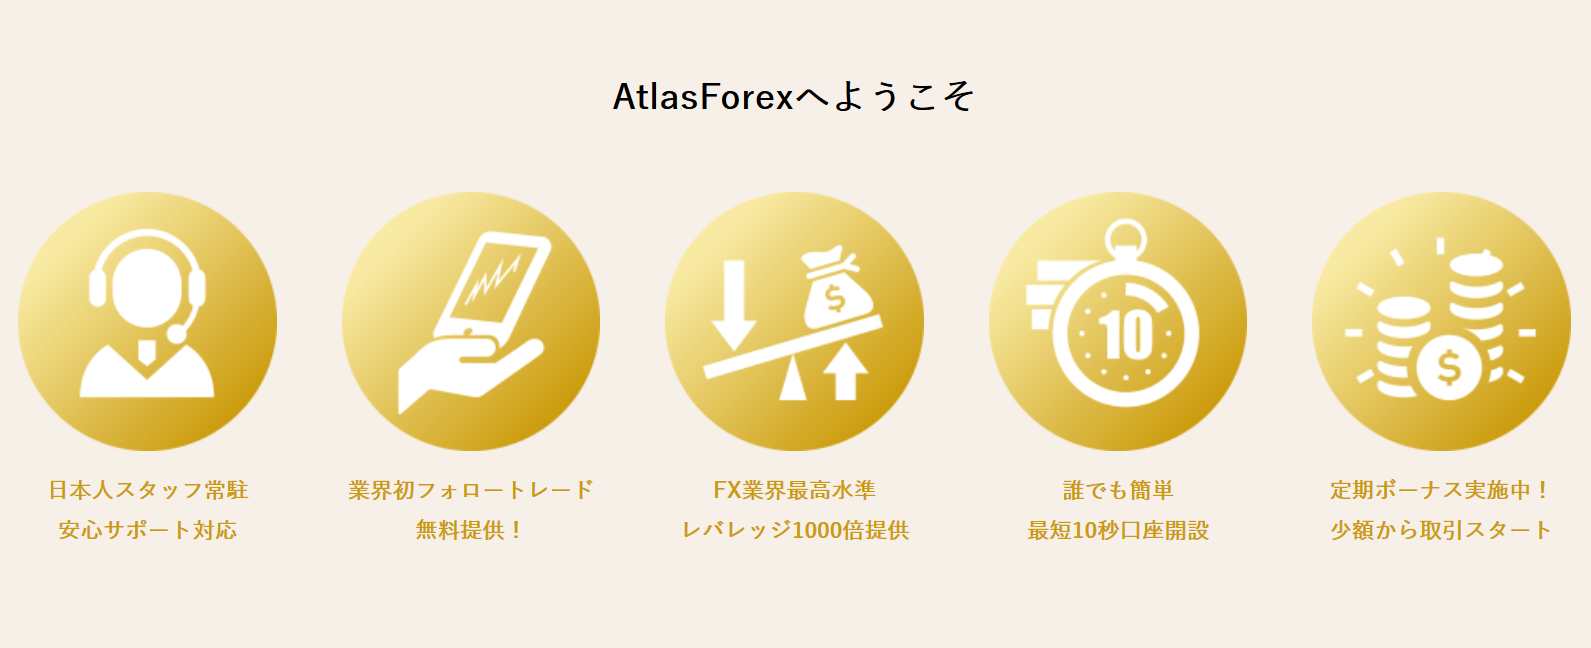 AtlasForex